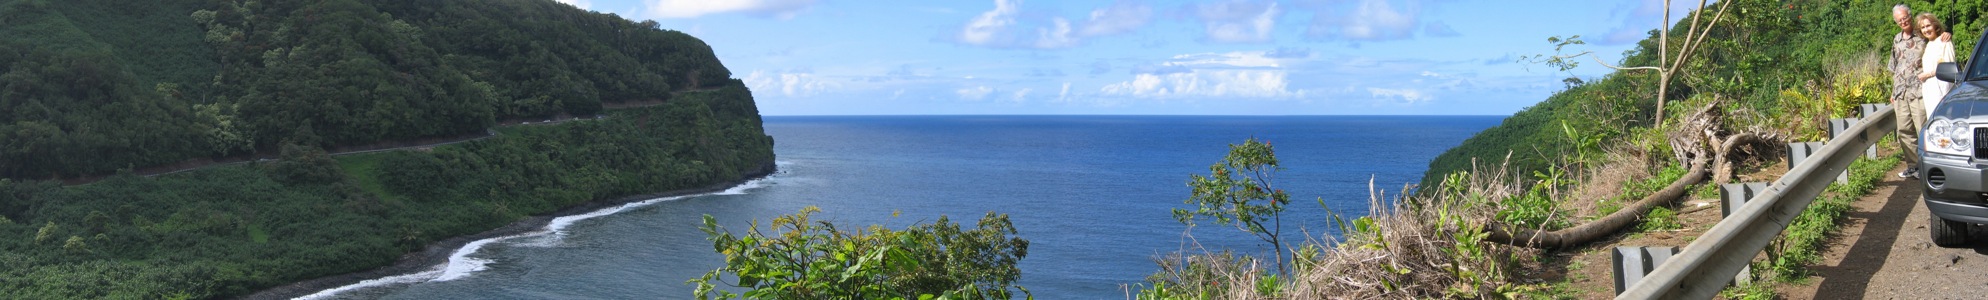 Honomanu Bay Maui - 4/2007